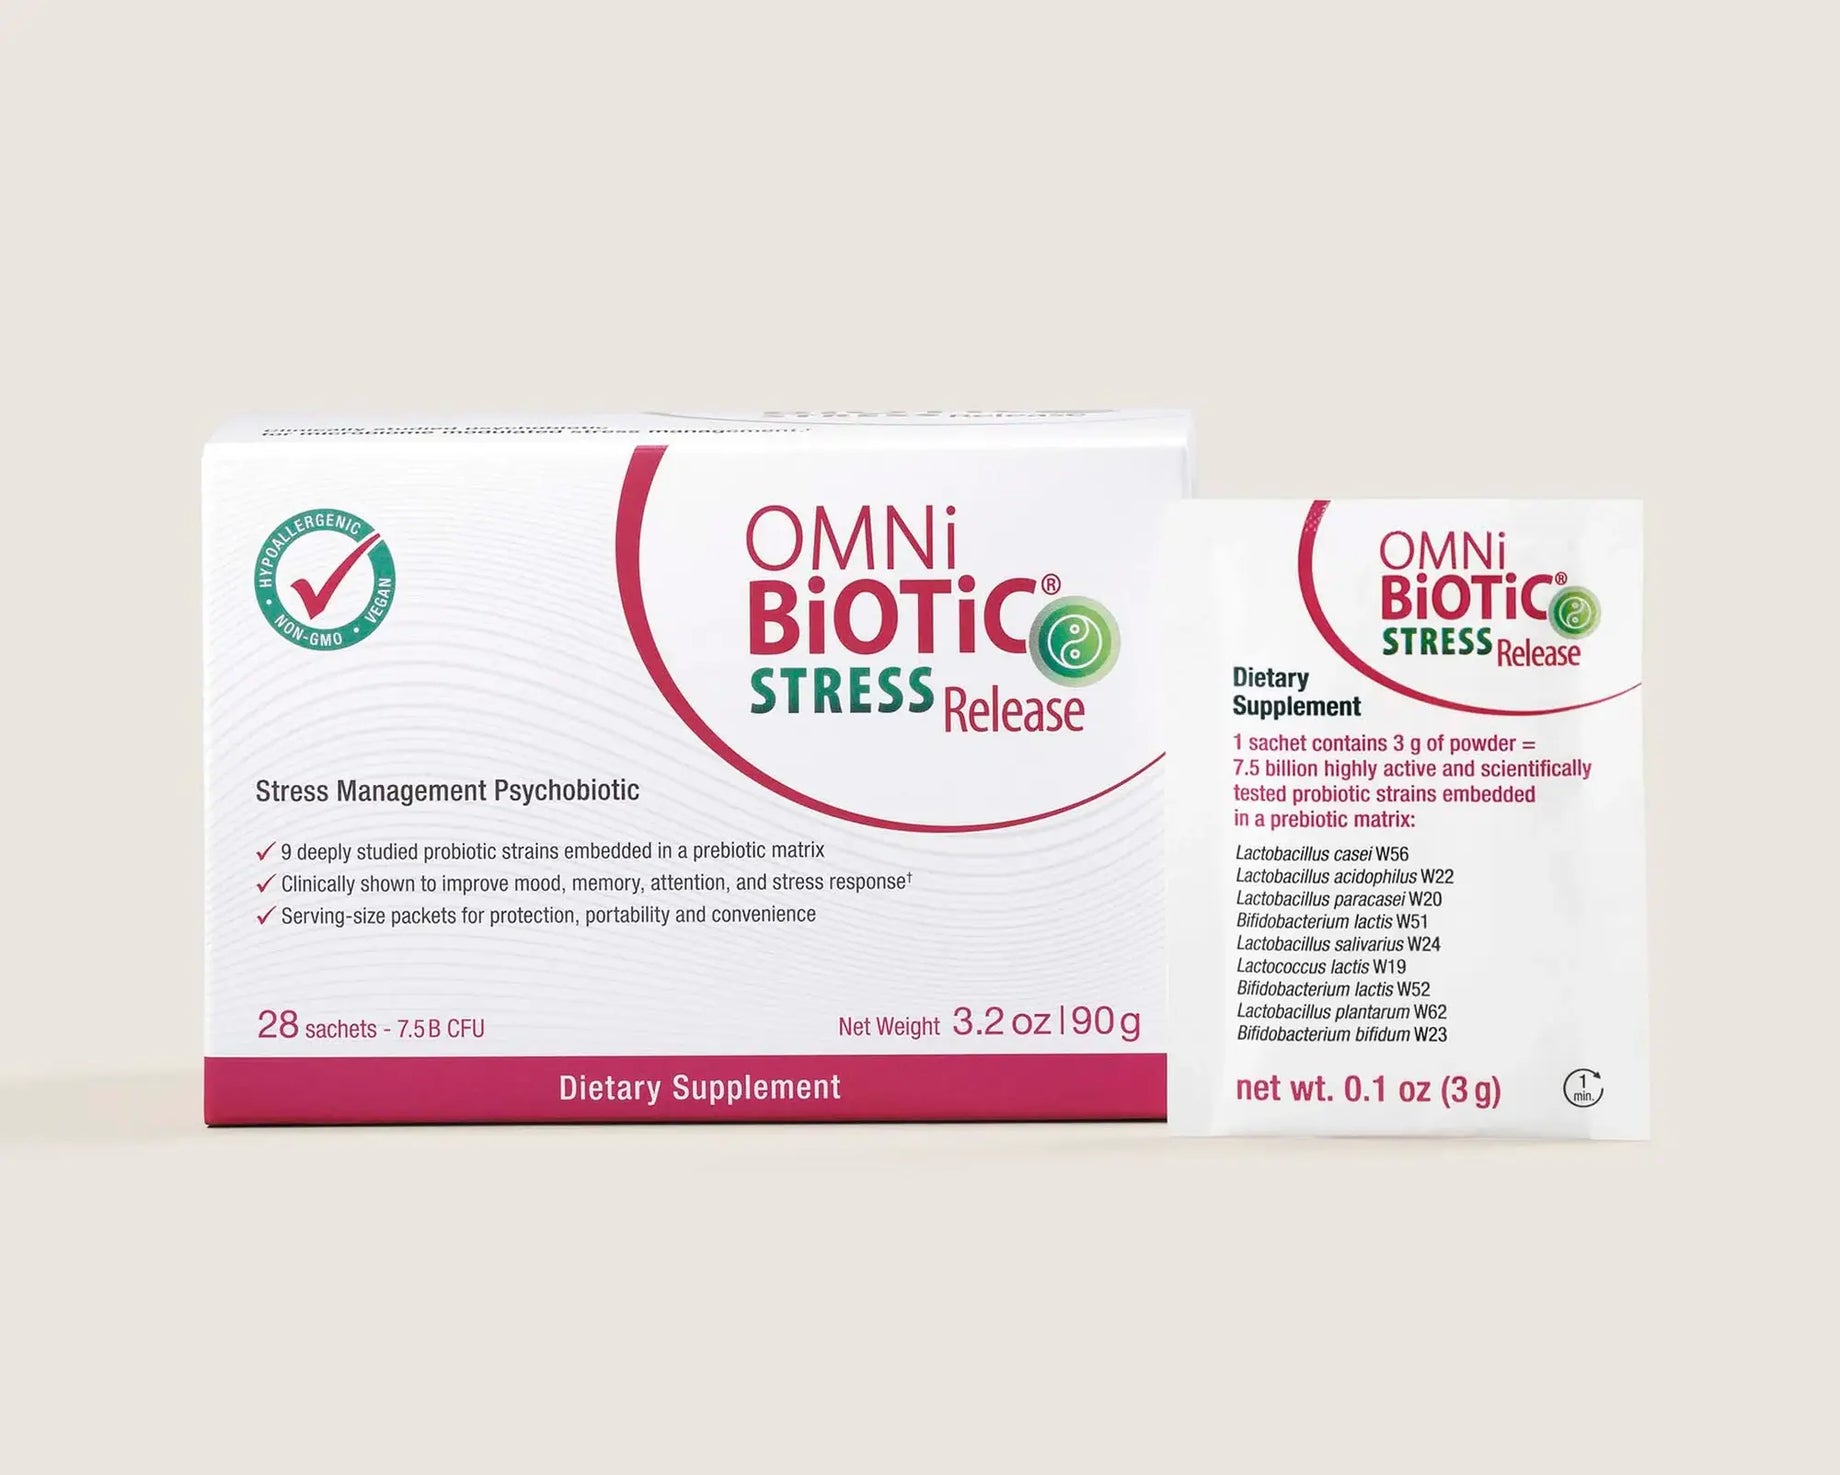 Introducing Omni-Biotic Stress Release